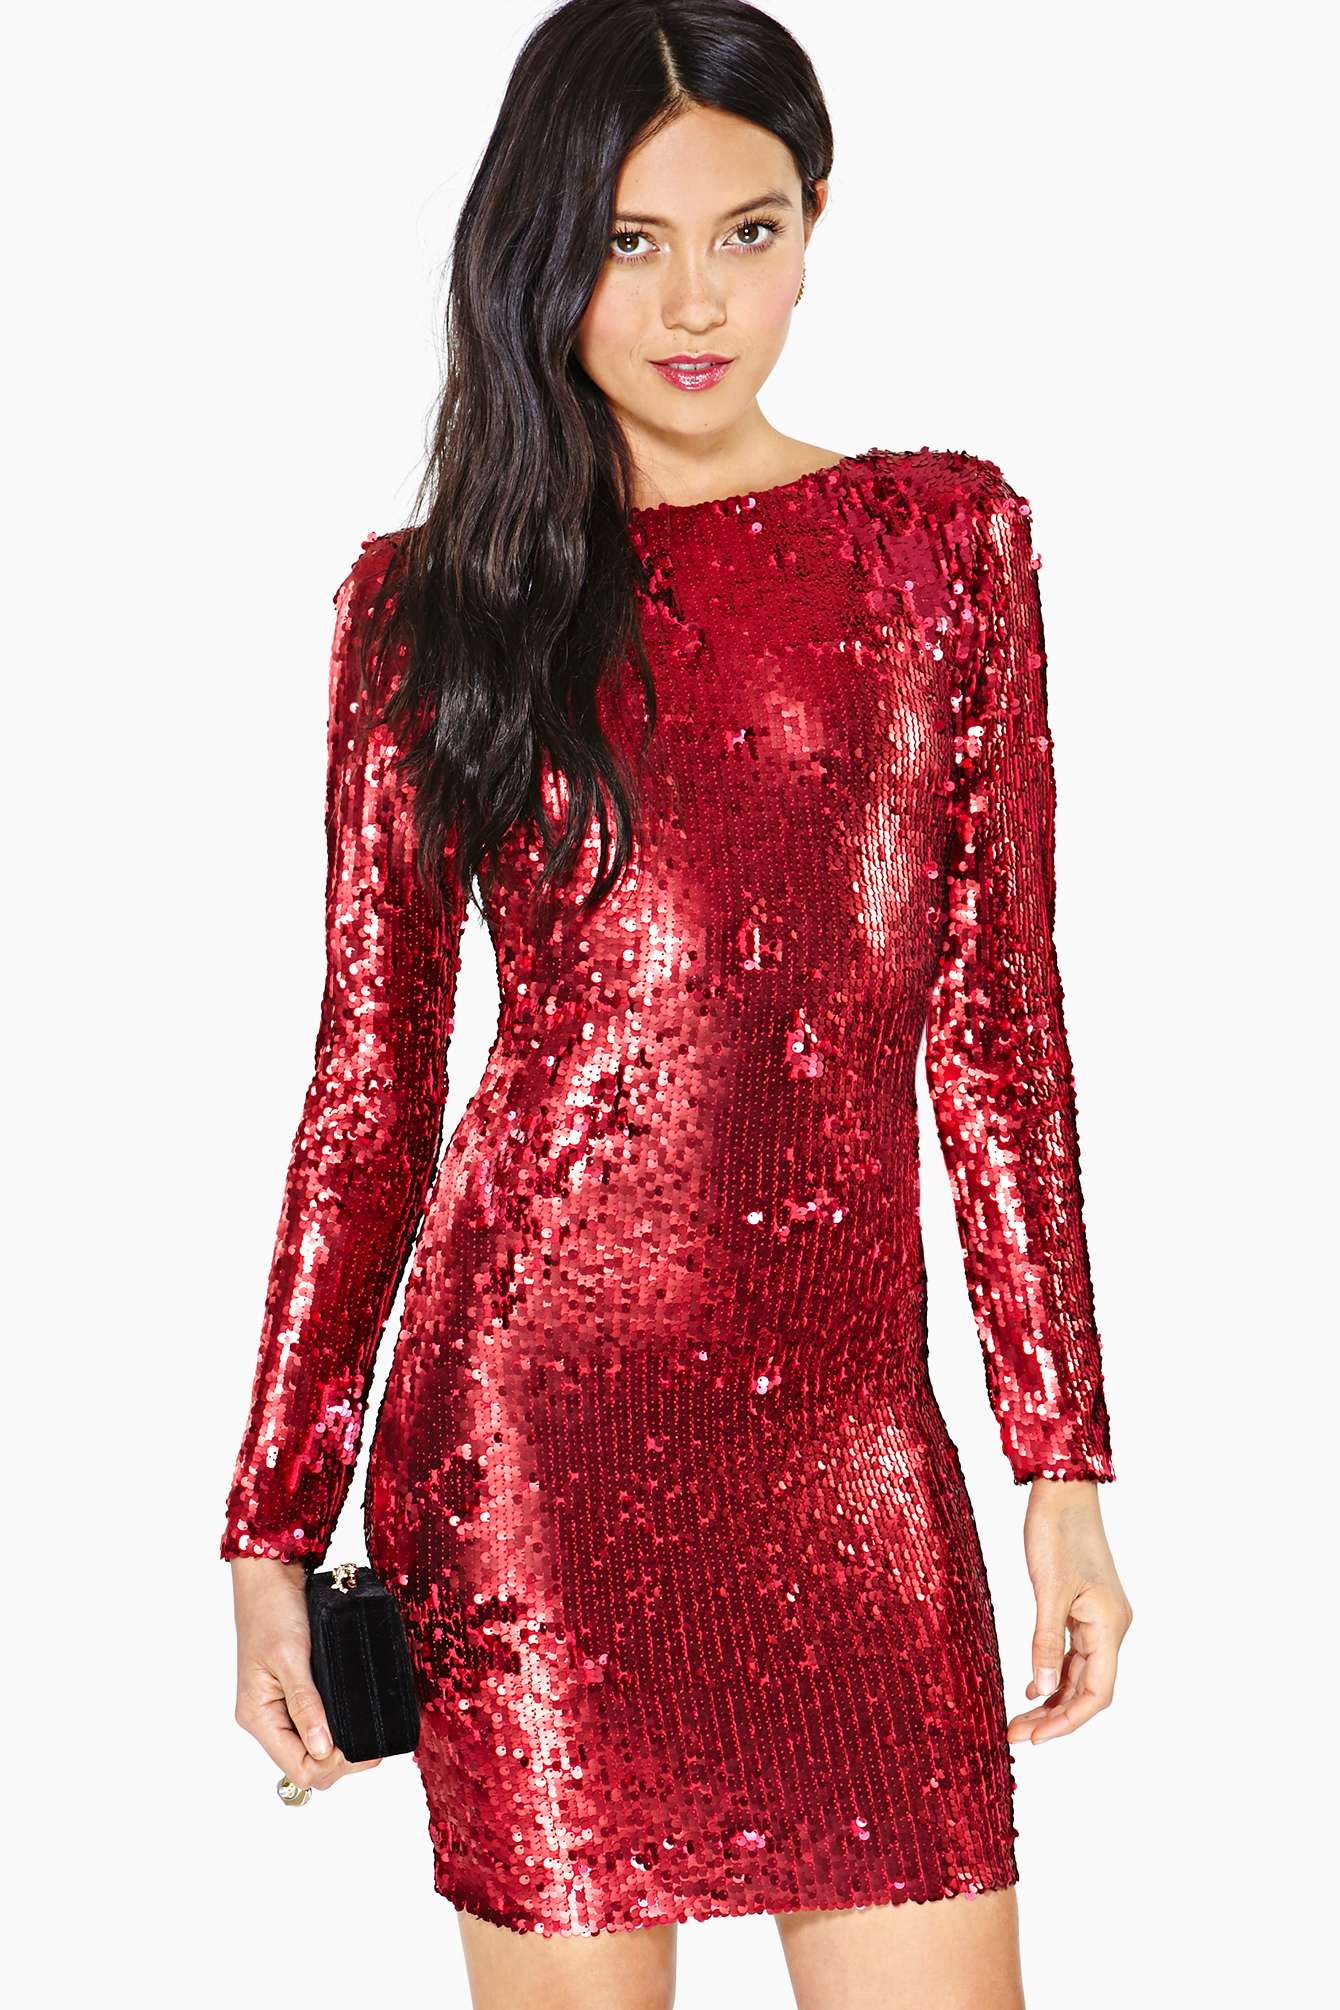 Red Sequin Dress - Cocktail Dresses 2016